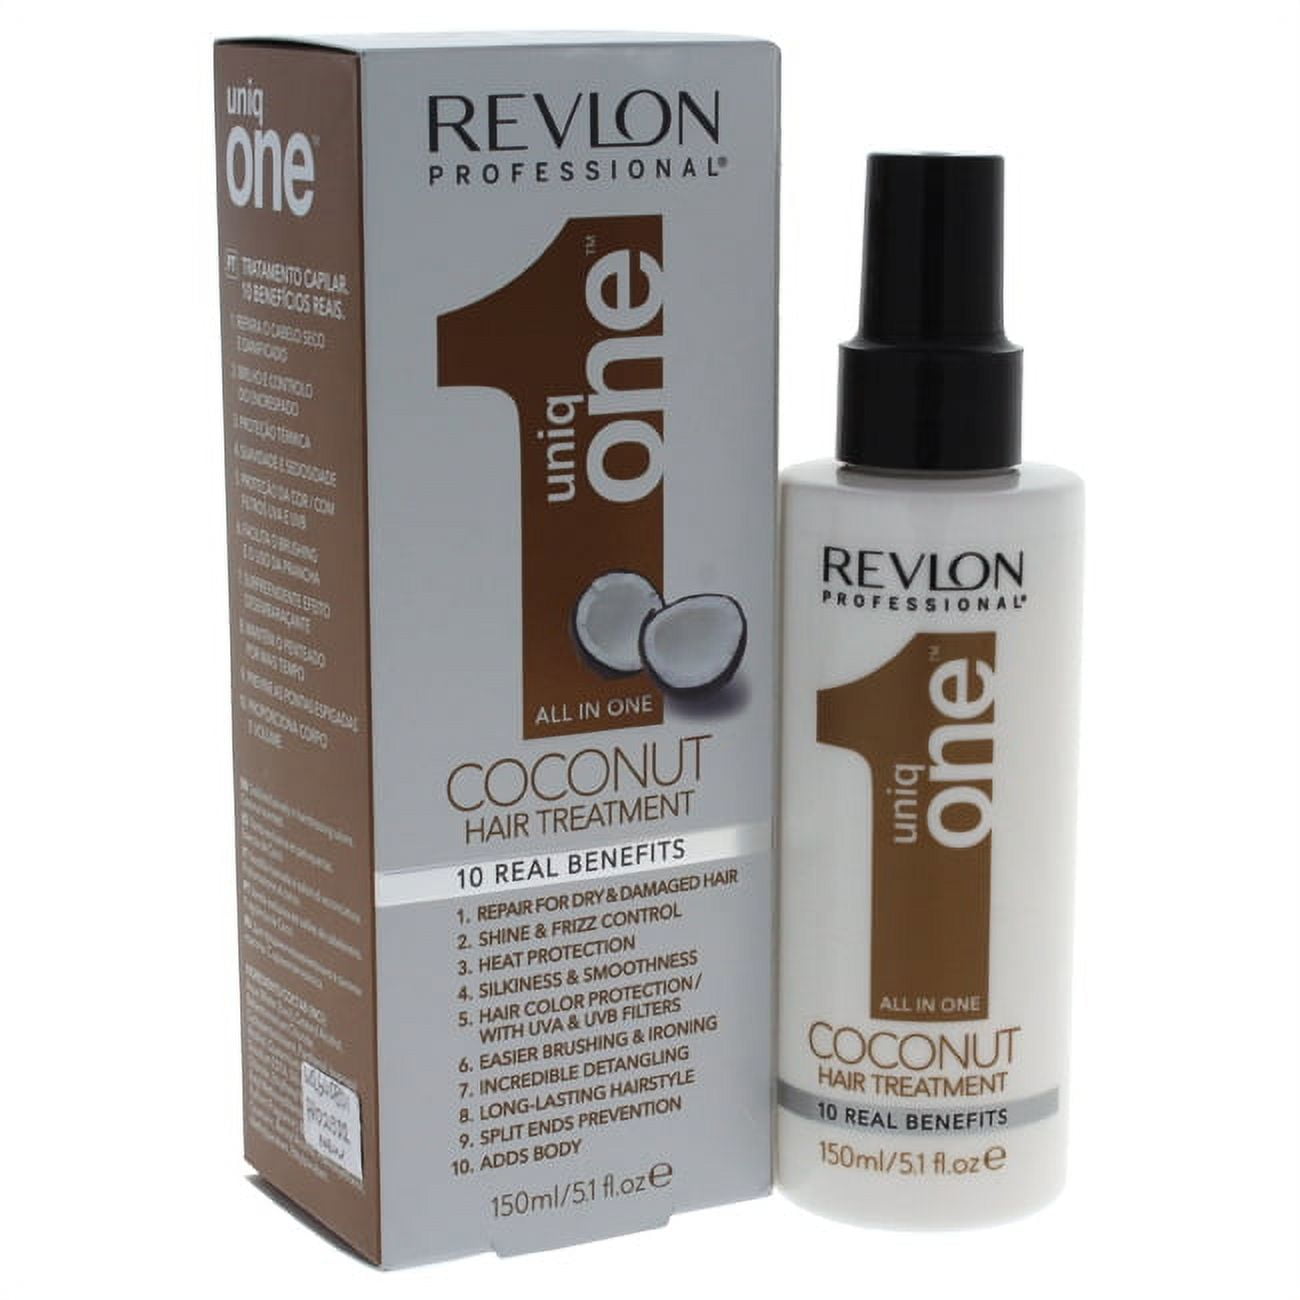 Revlon Uniq One Coconut Hair oz 5.1 Treatment